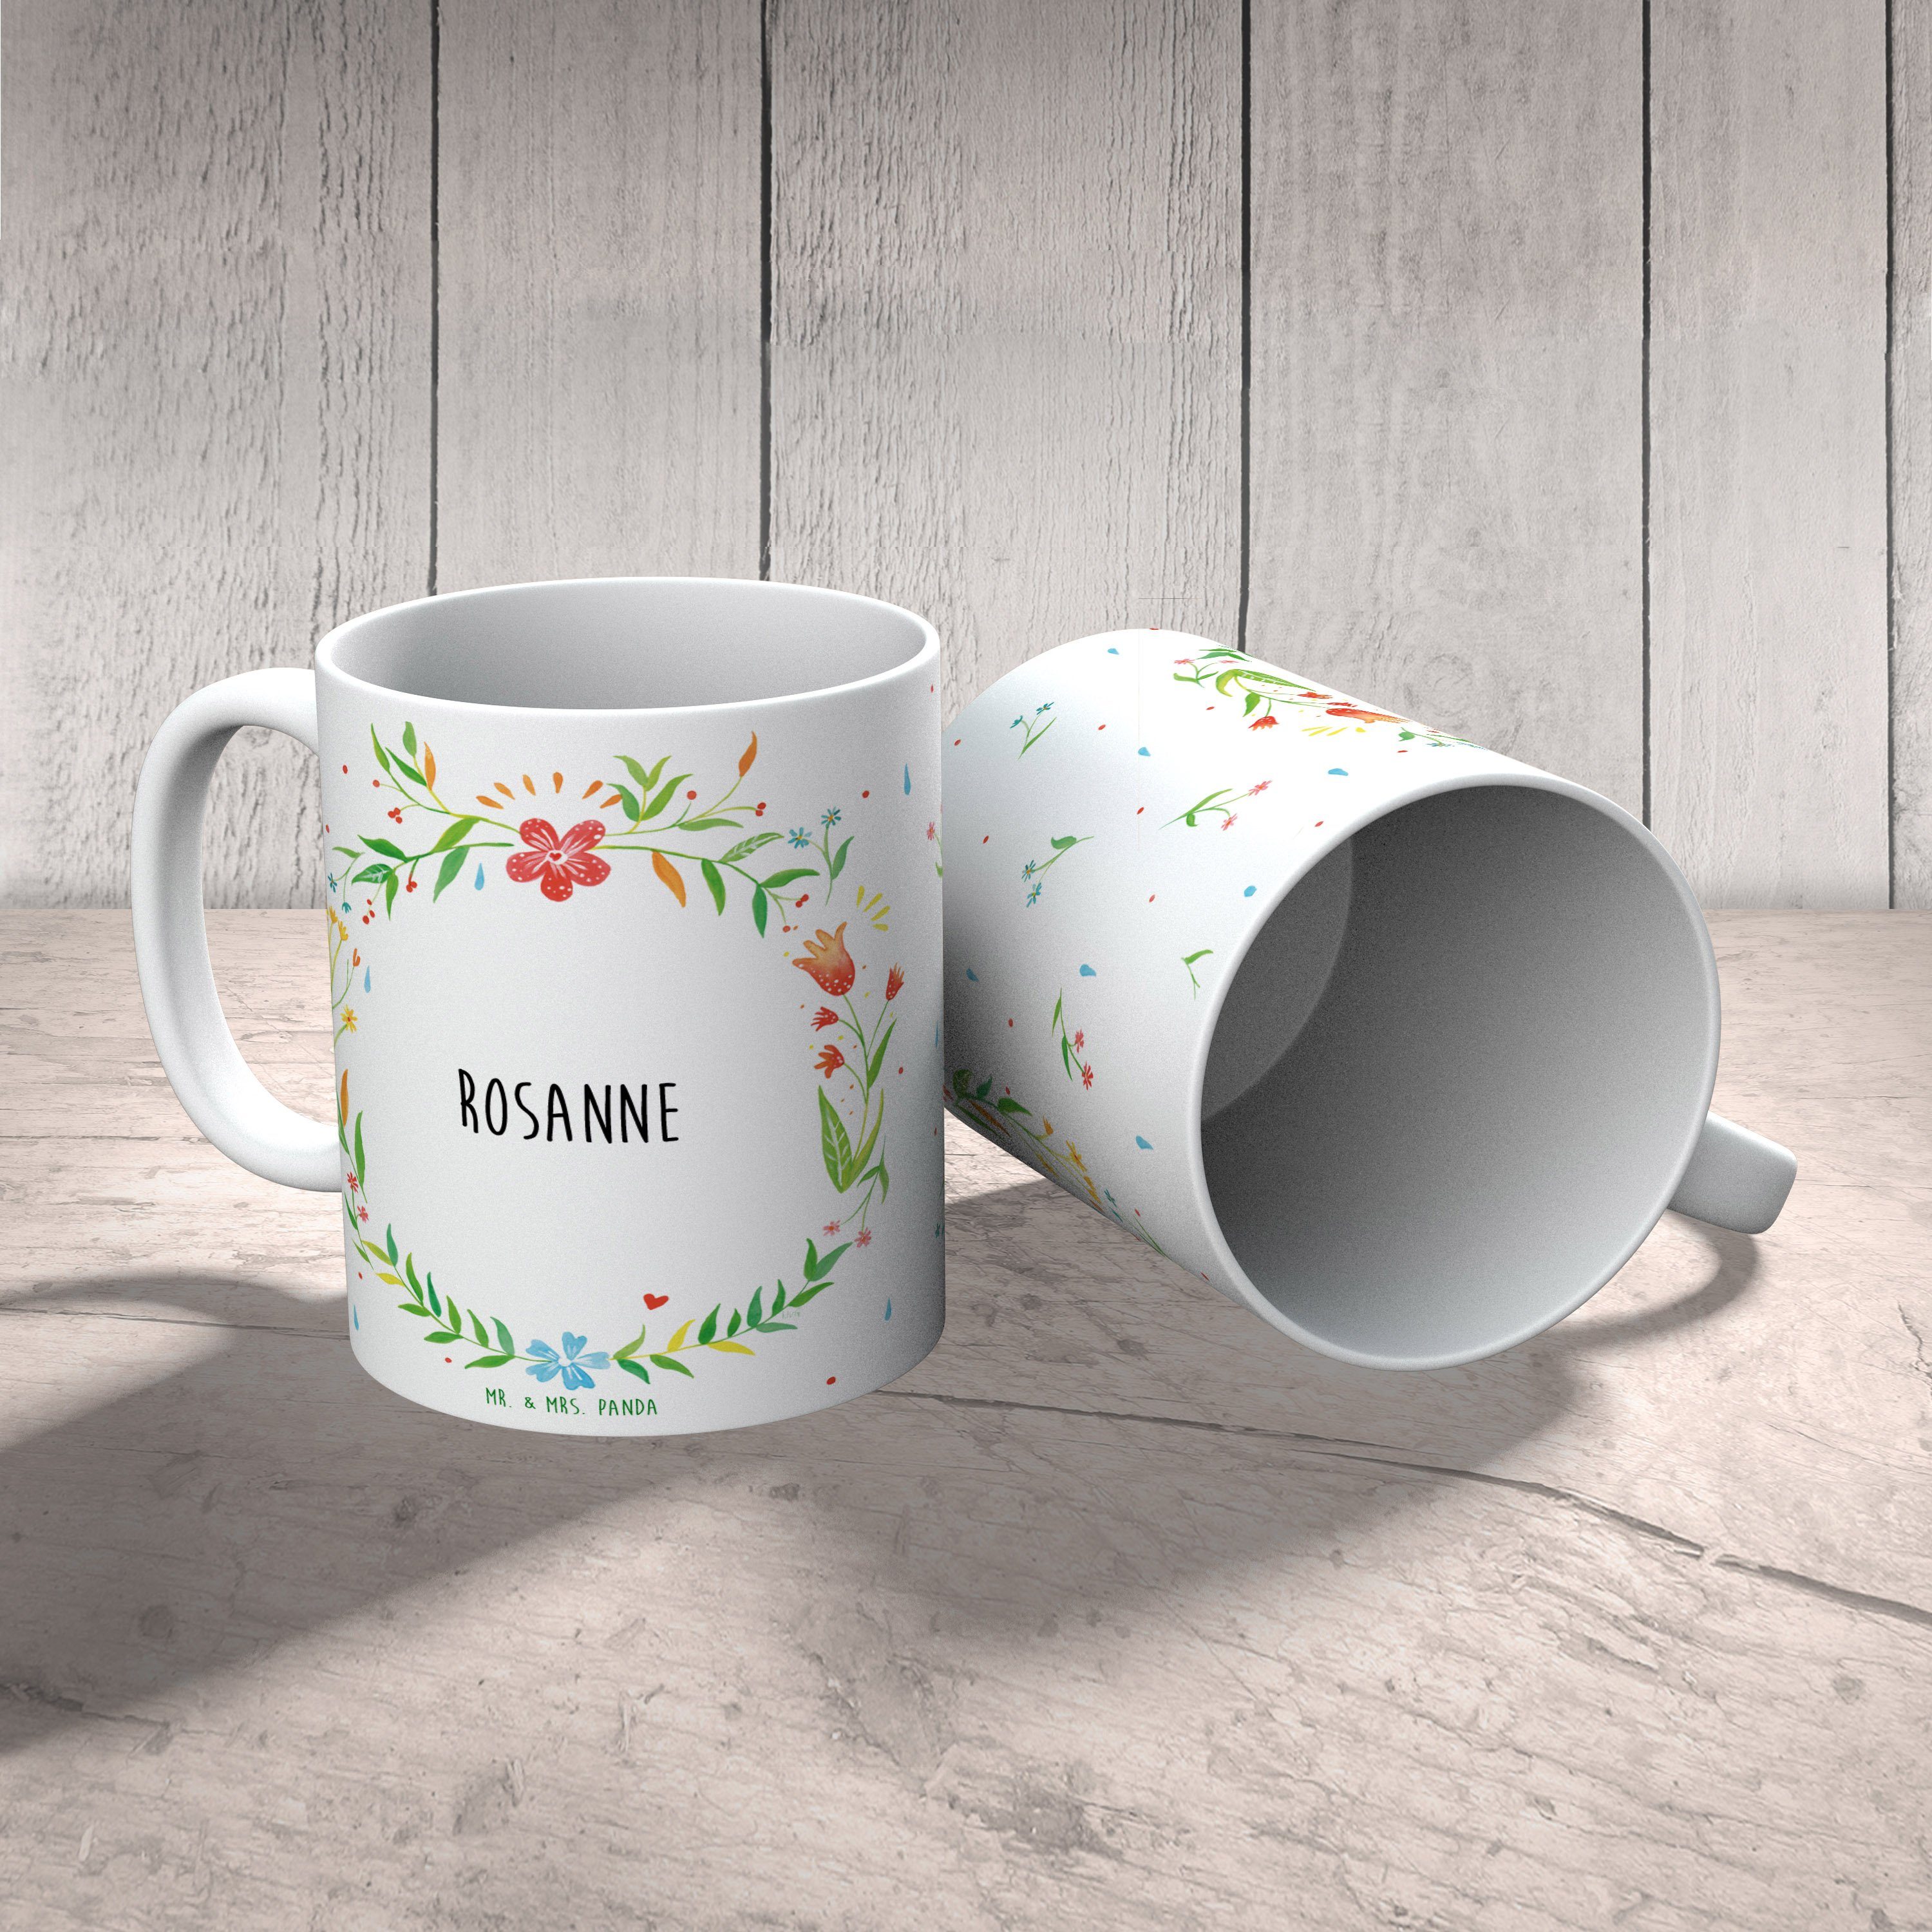 Mr. & Mrs. Panda Büro Tasse - Kaffeetasse, Keramik Geschenk, Rosanne Teetasse, Tasse, Kaffeebecher